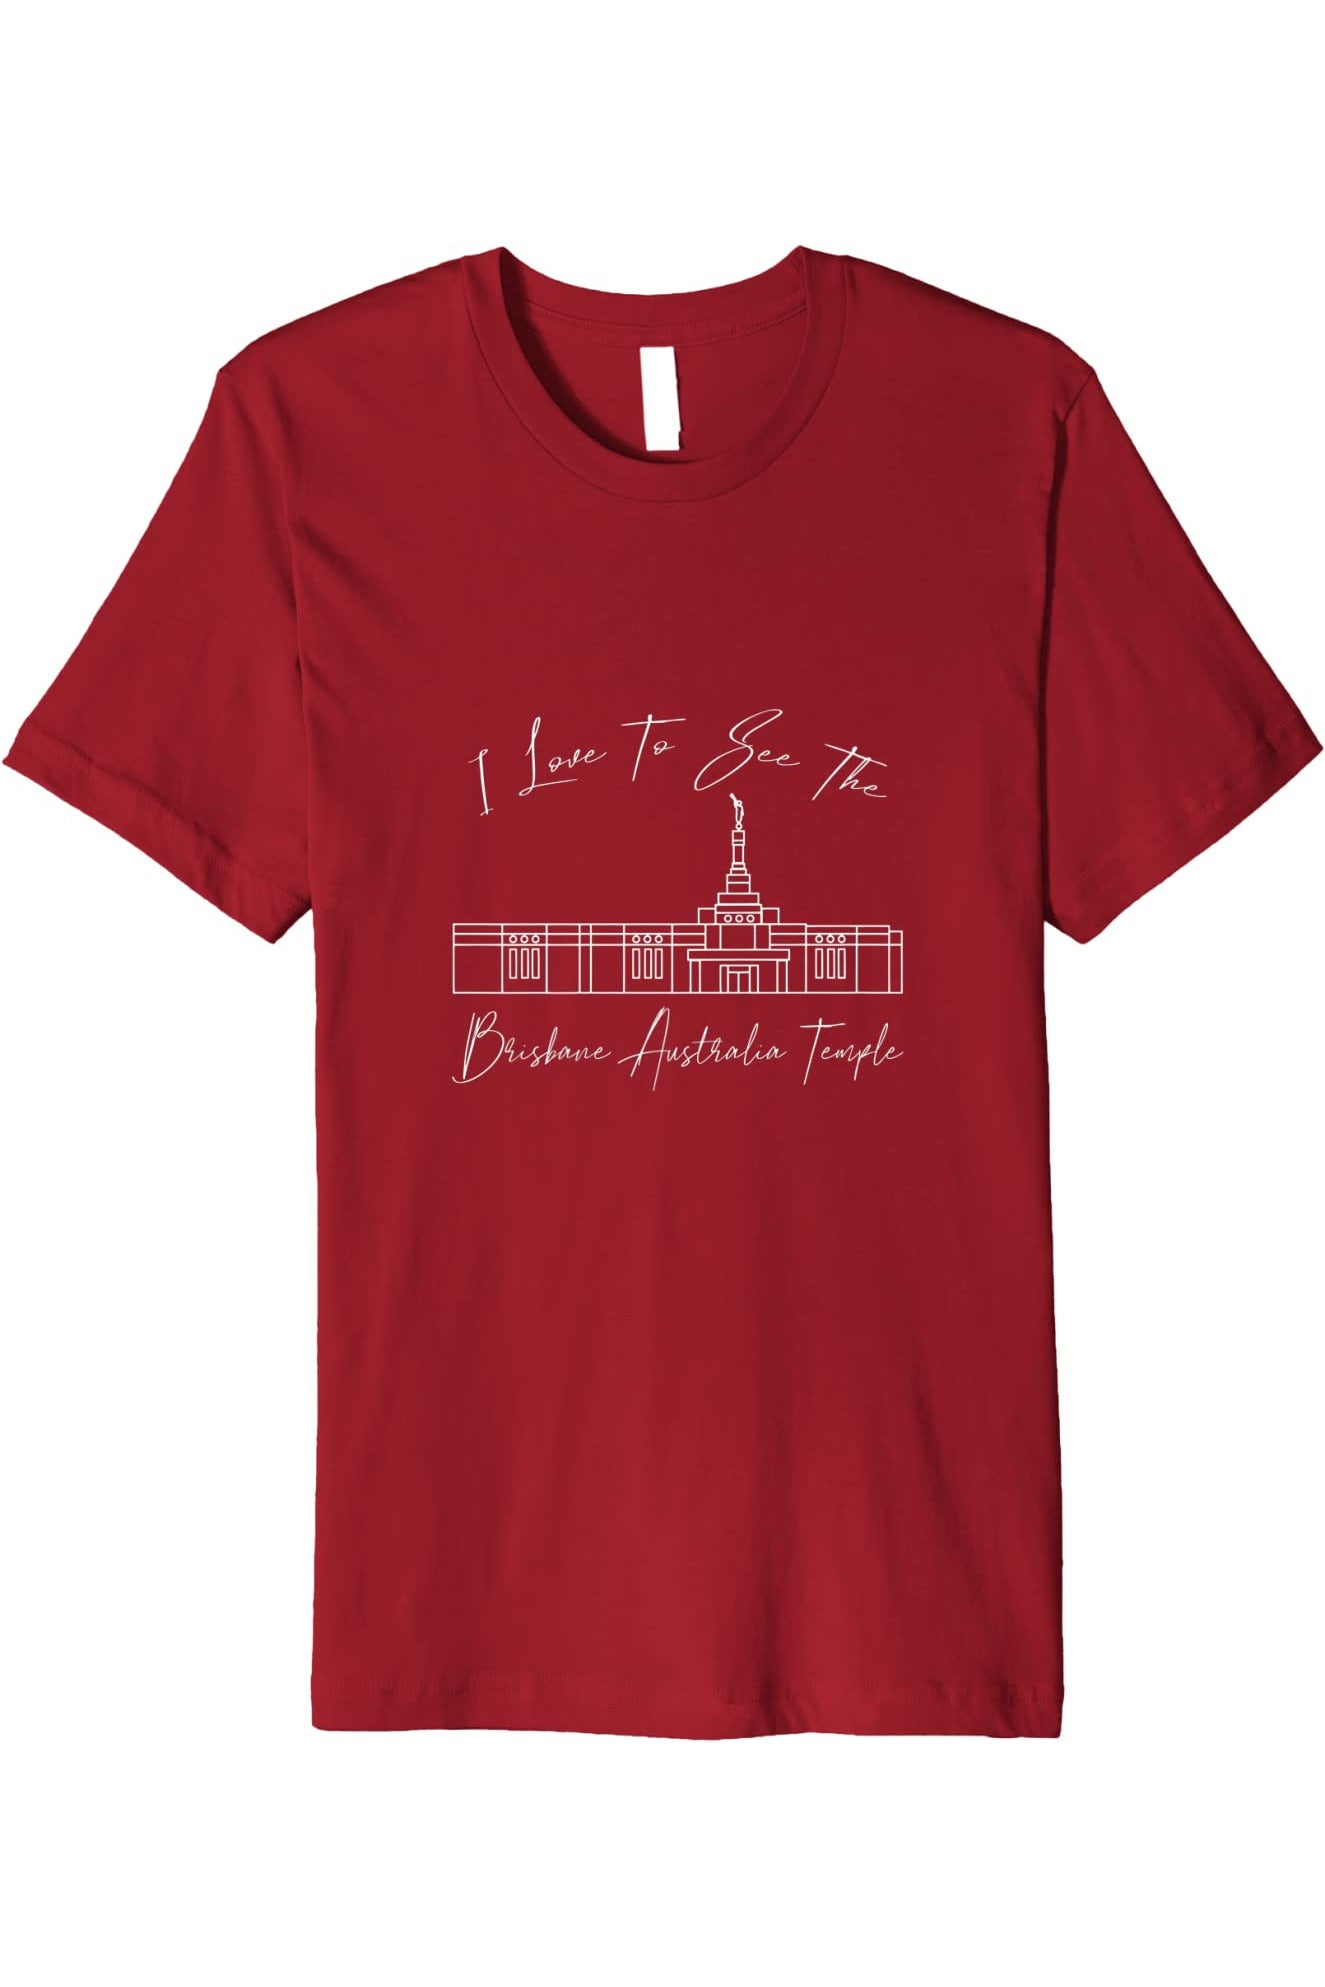 Brisbane Australia Temple T-Shirt - Premium - Calligraphy Style (English) US